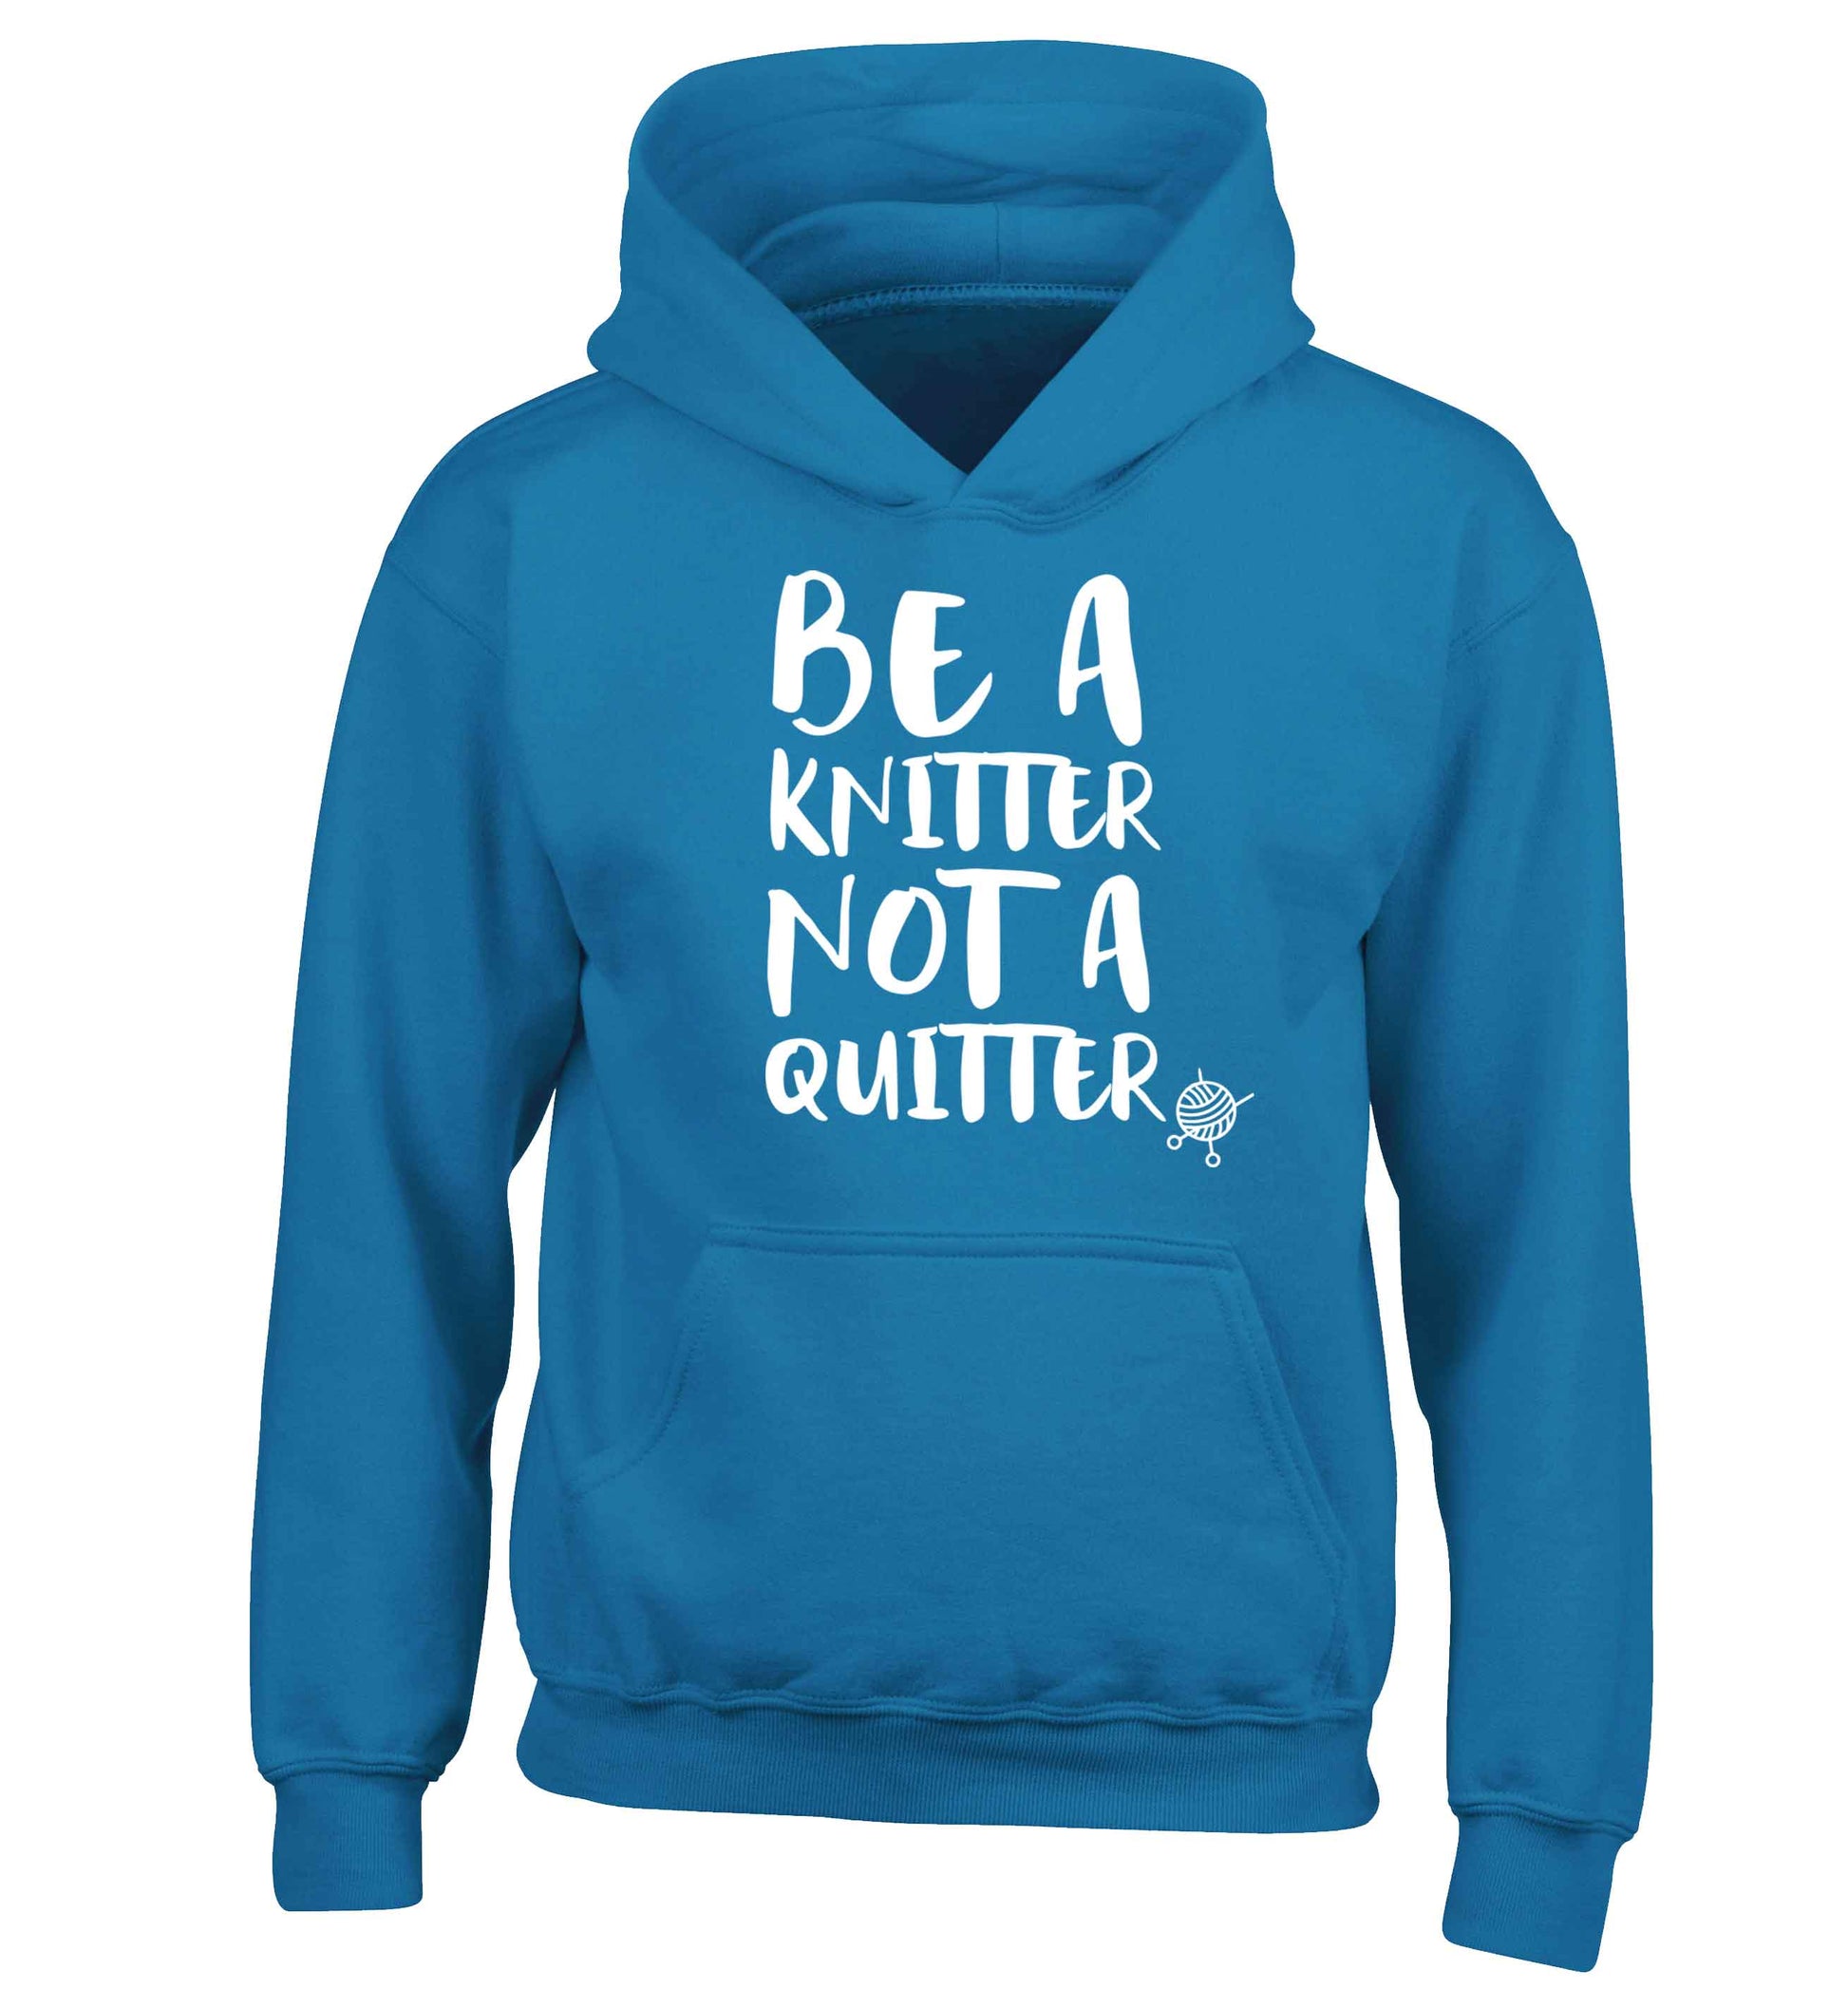 Be a knitter not a quitter children's blue hoodie 12-13 Years